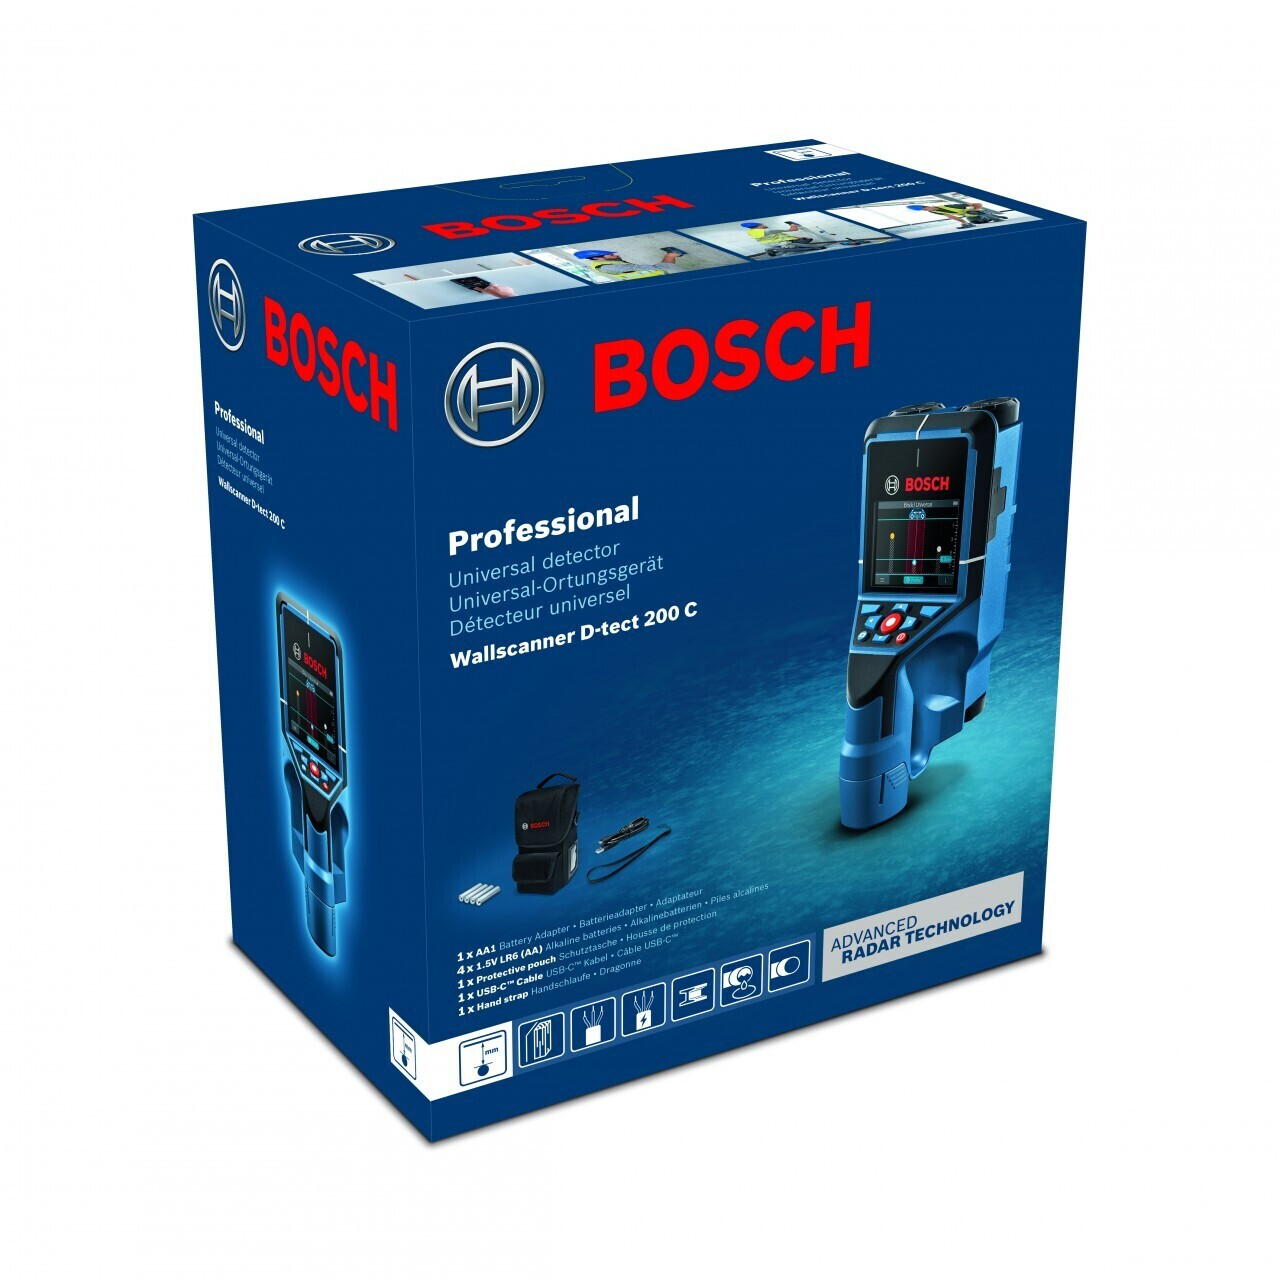 Detektor Bosch D-tect 200 C Professional - NorWit, s.r.o.